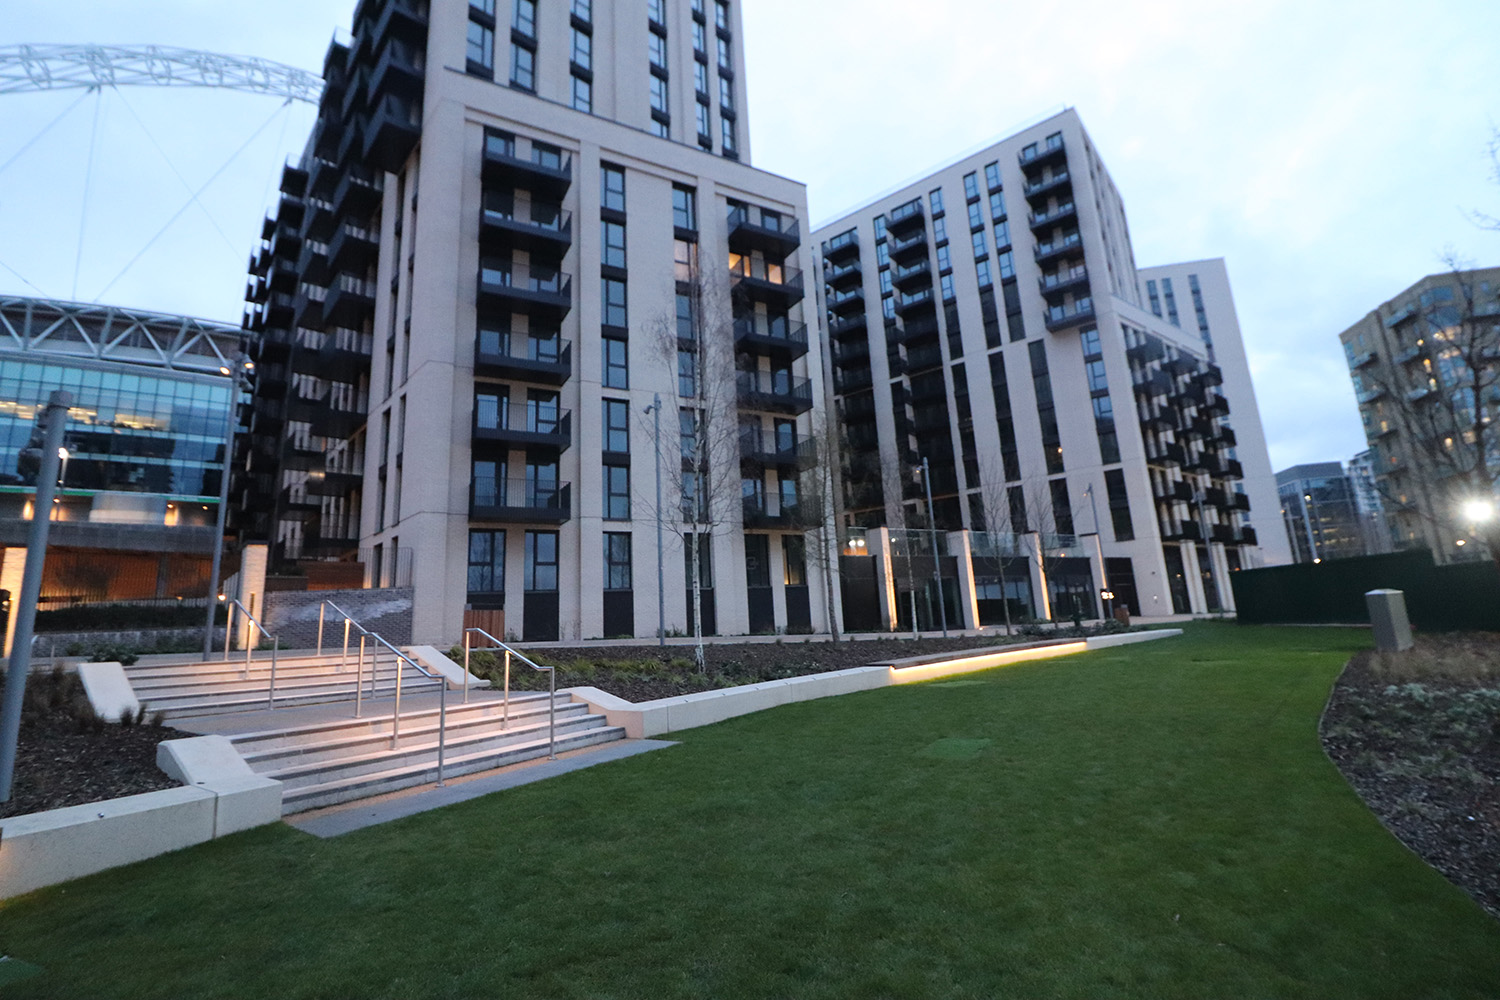 Sapphire provide modular balconies for Wembley Park development